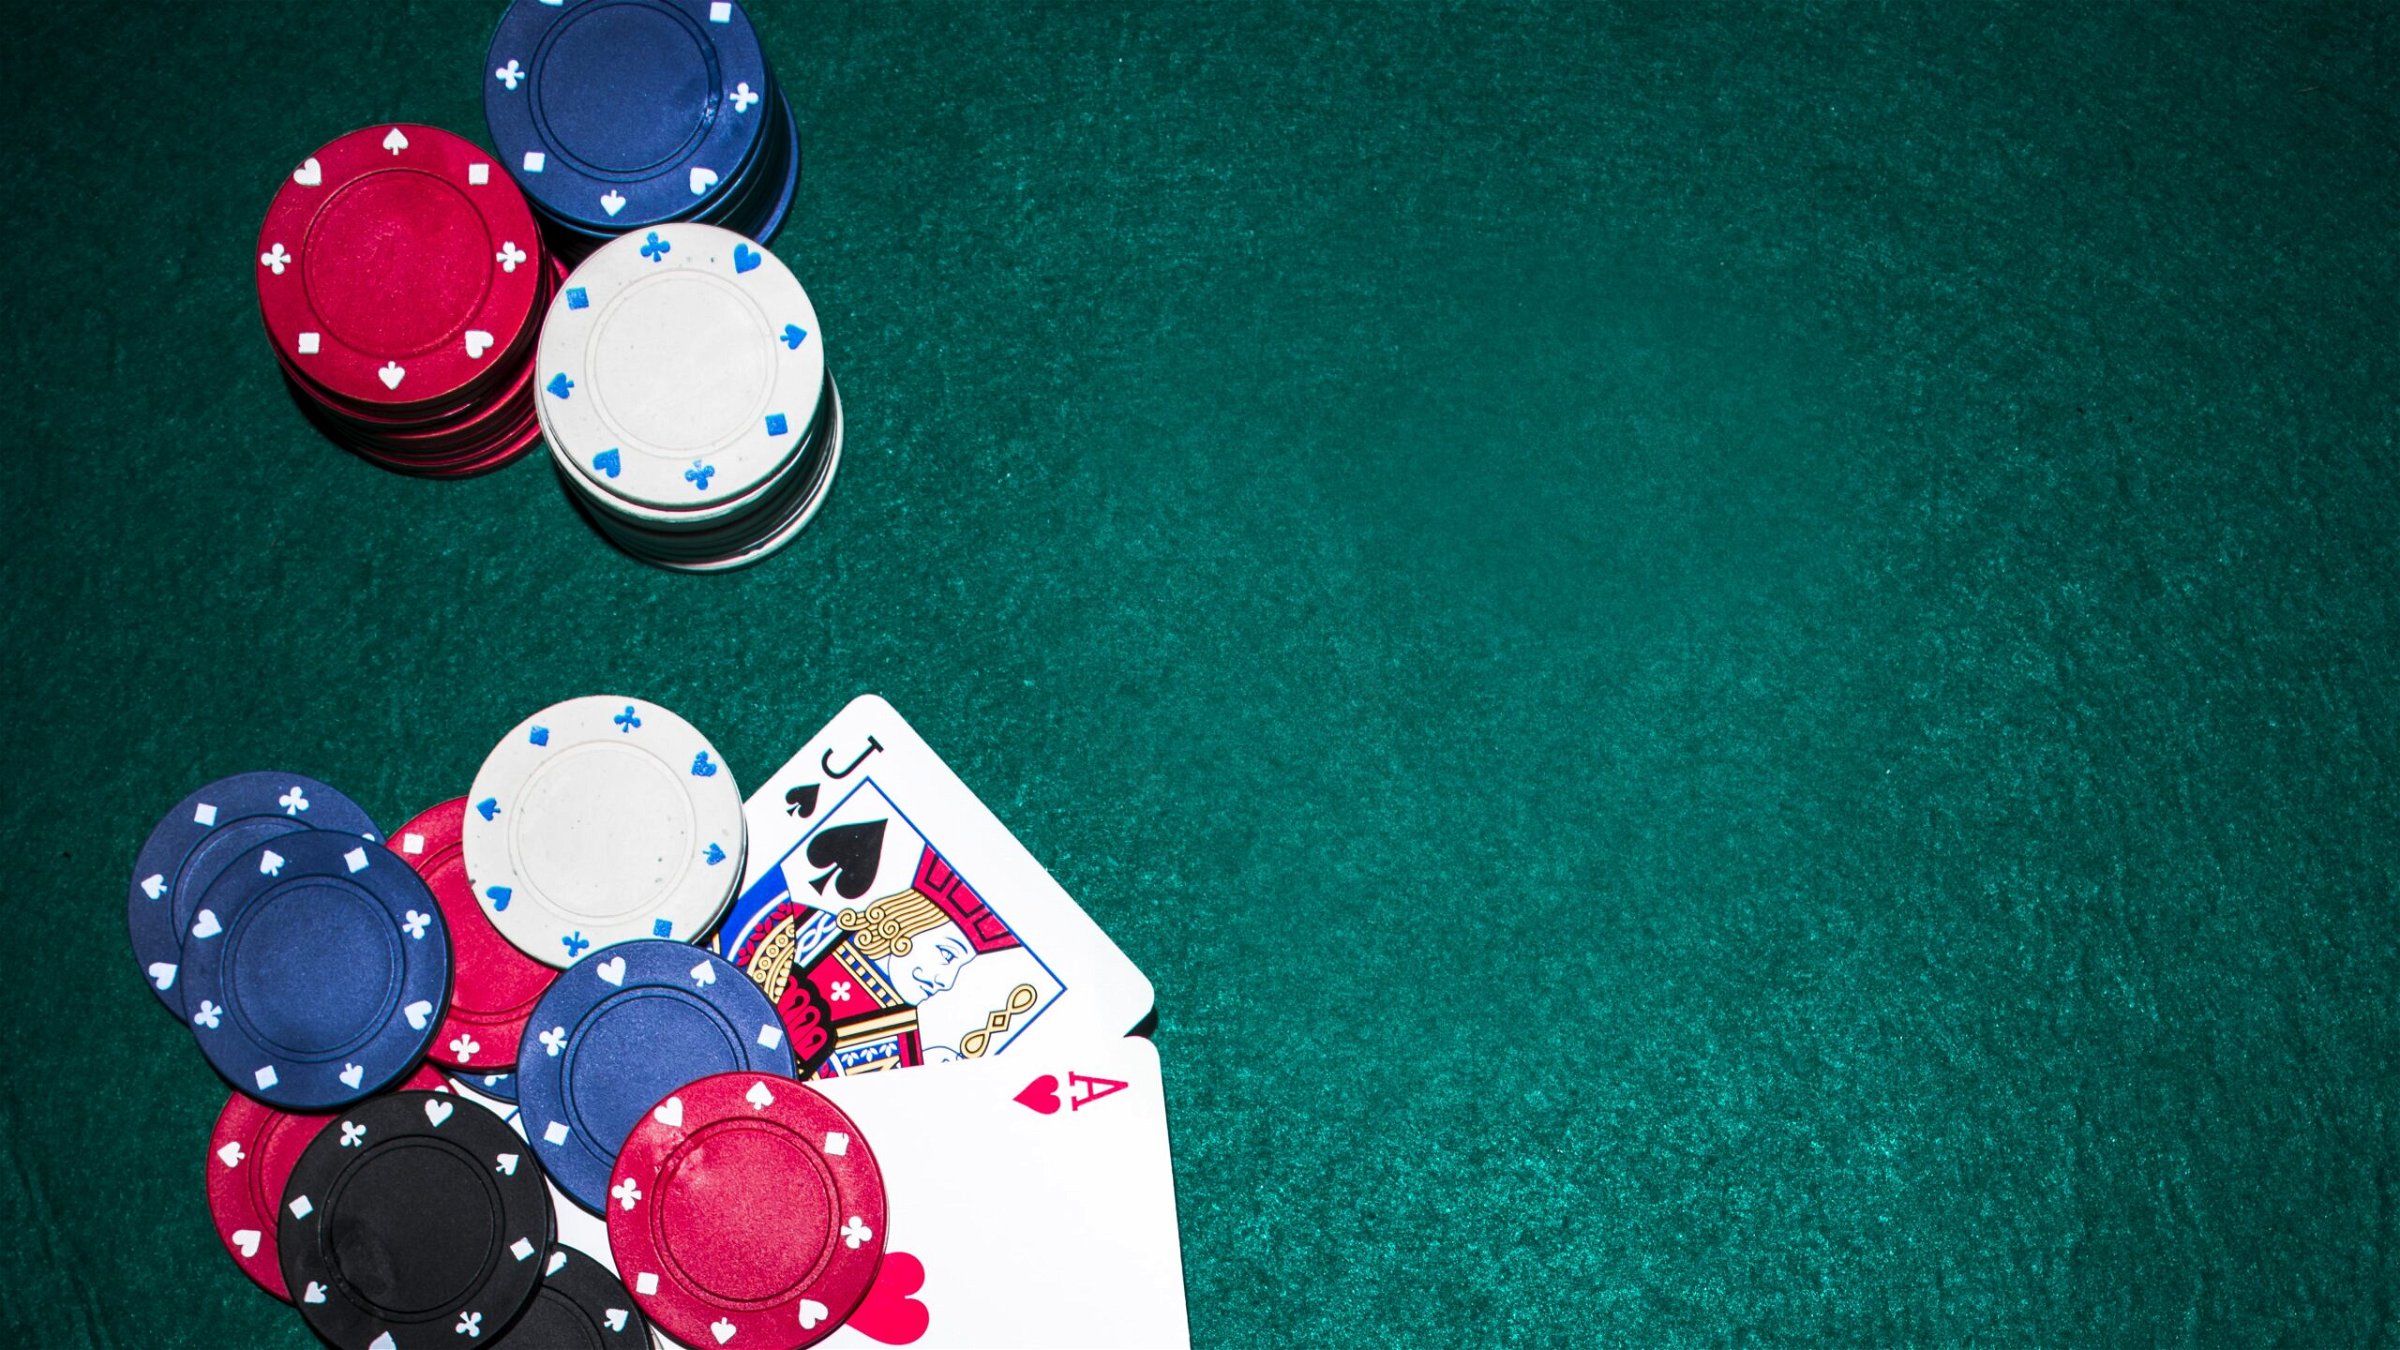 Top 5 criteria for choosing an online casino